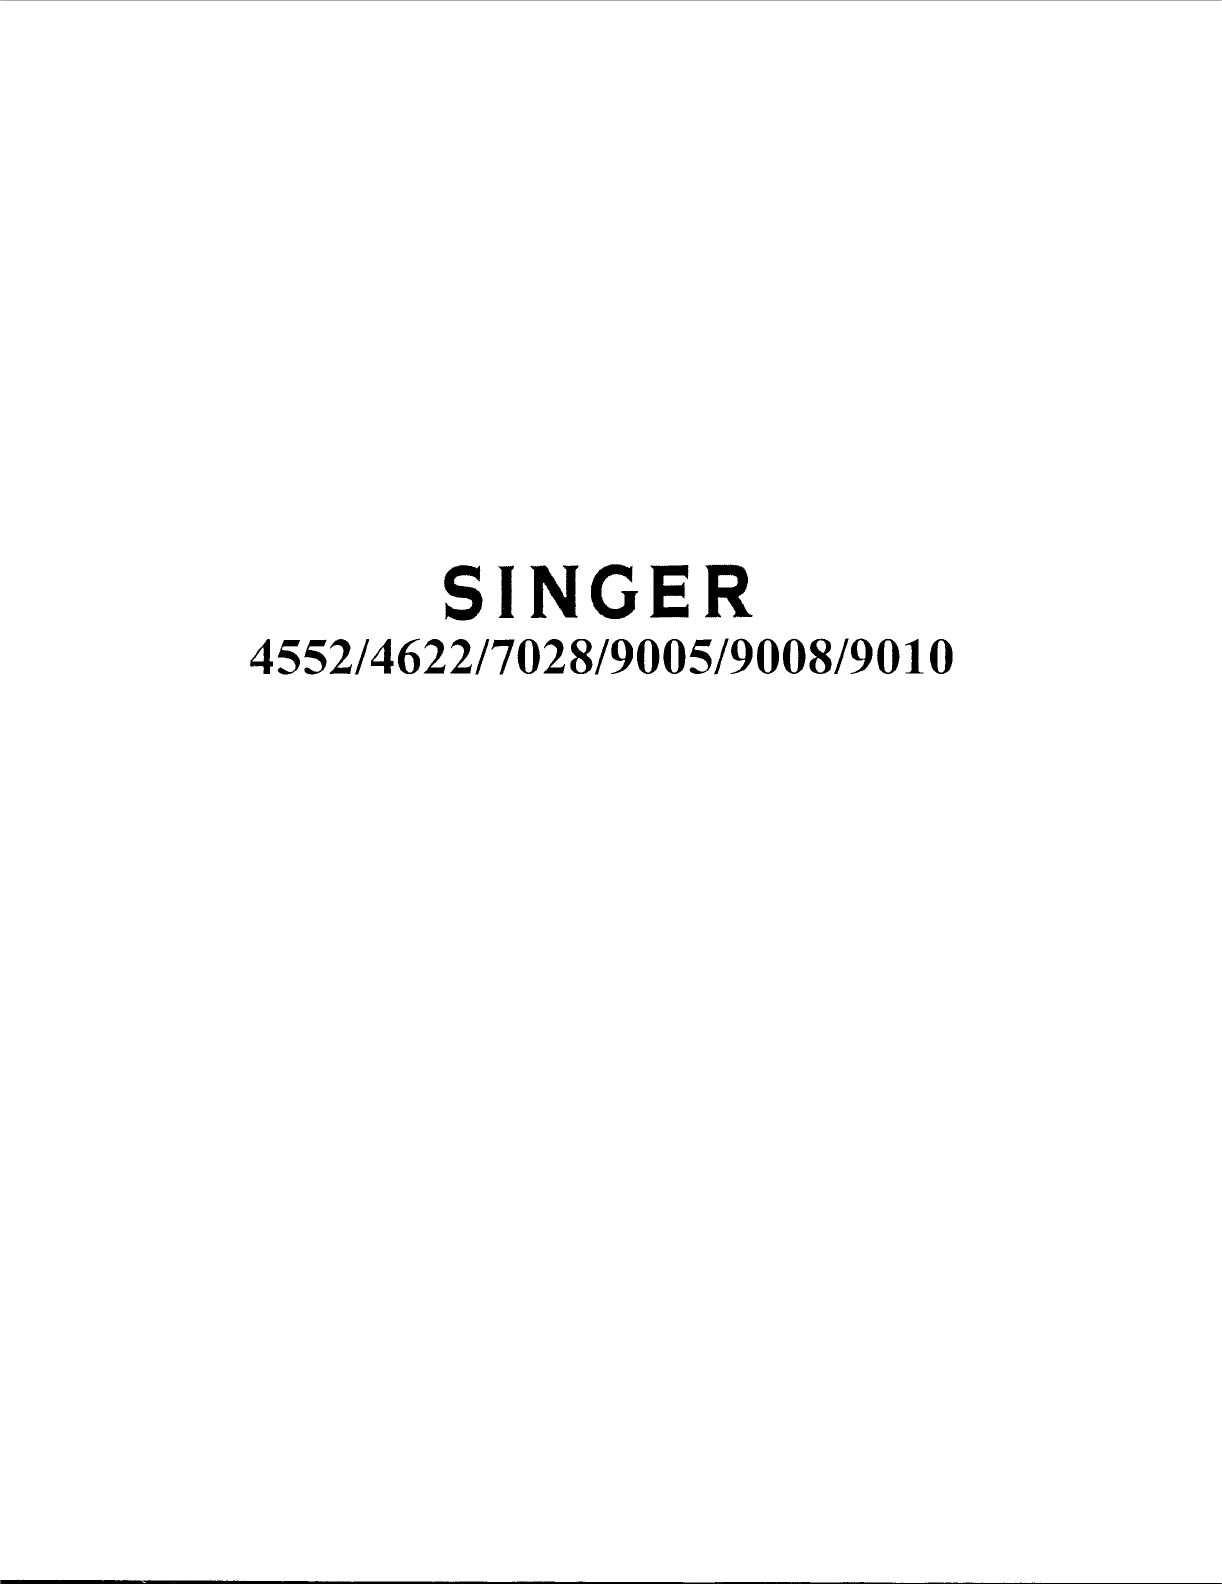 Singer model 4622a manual